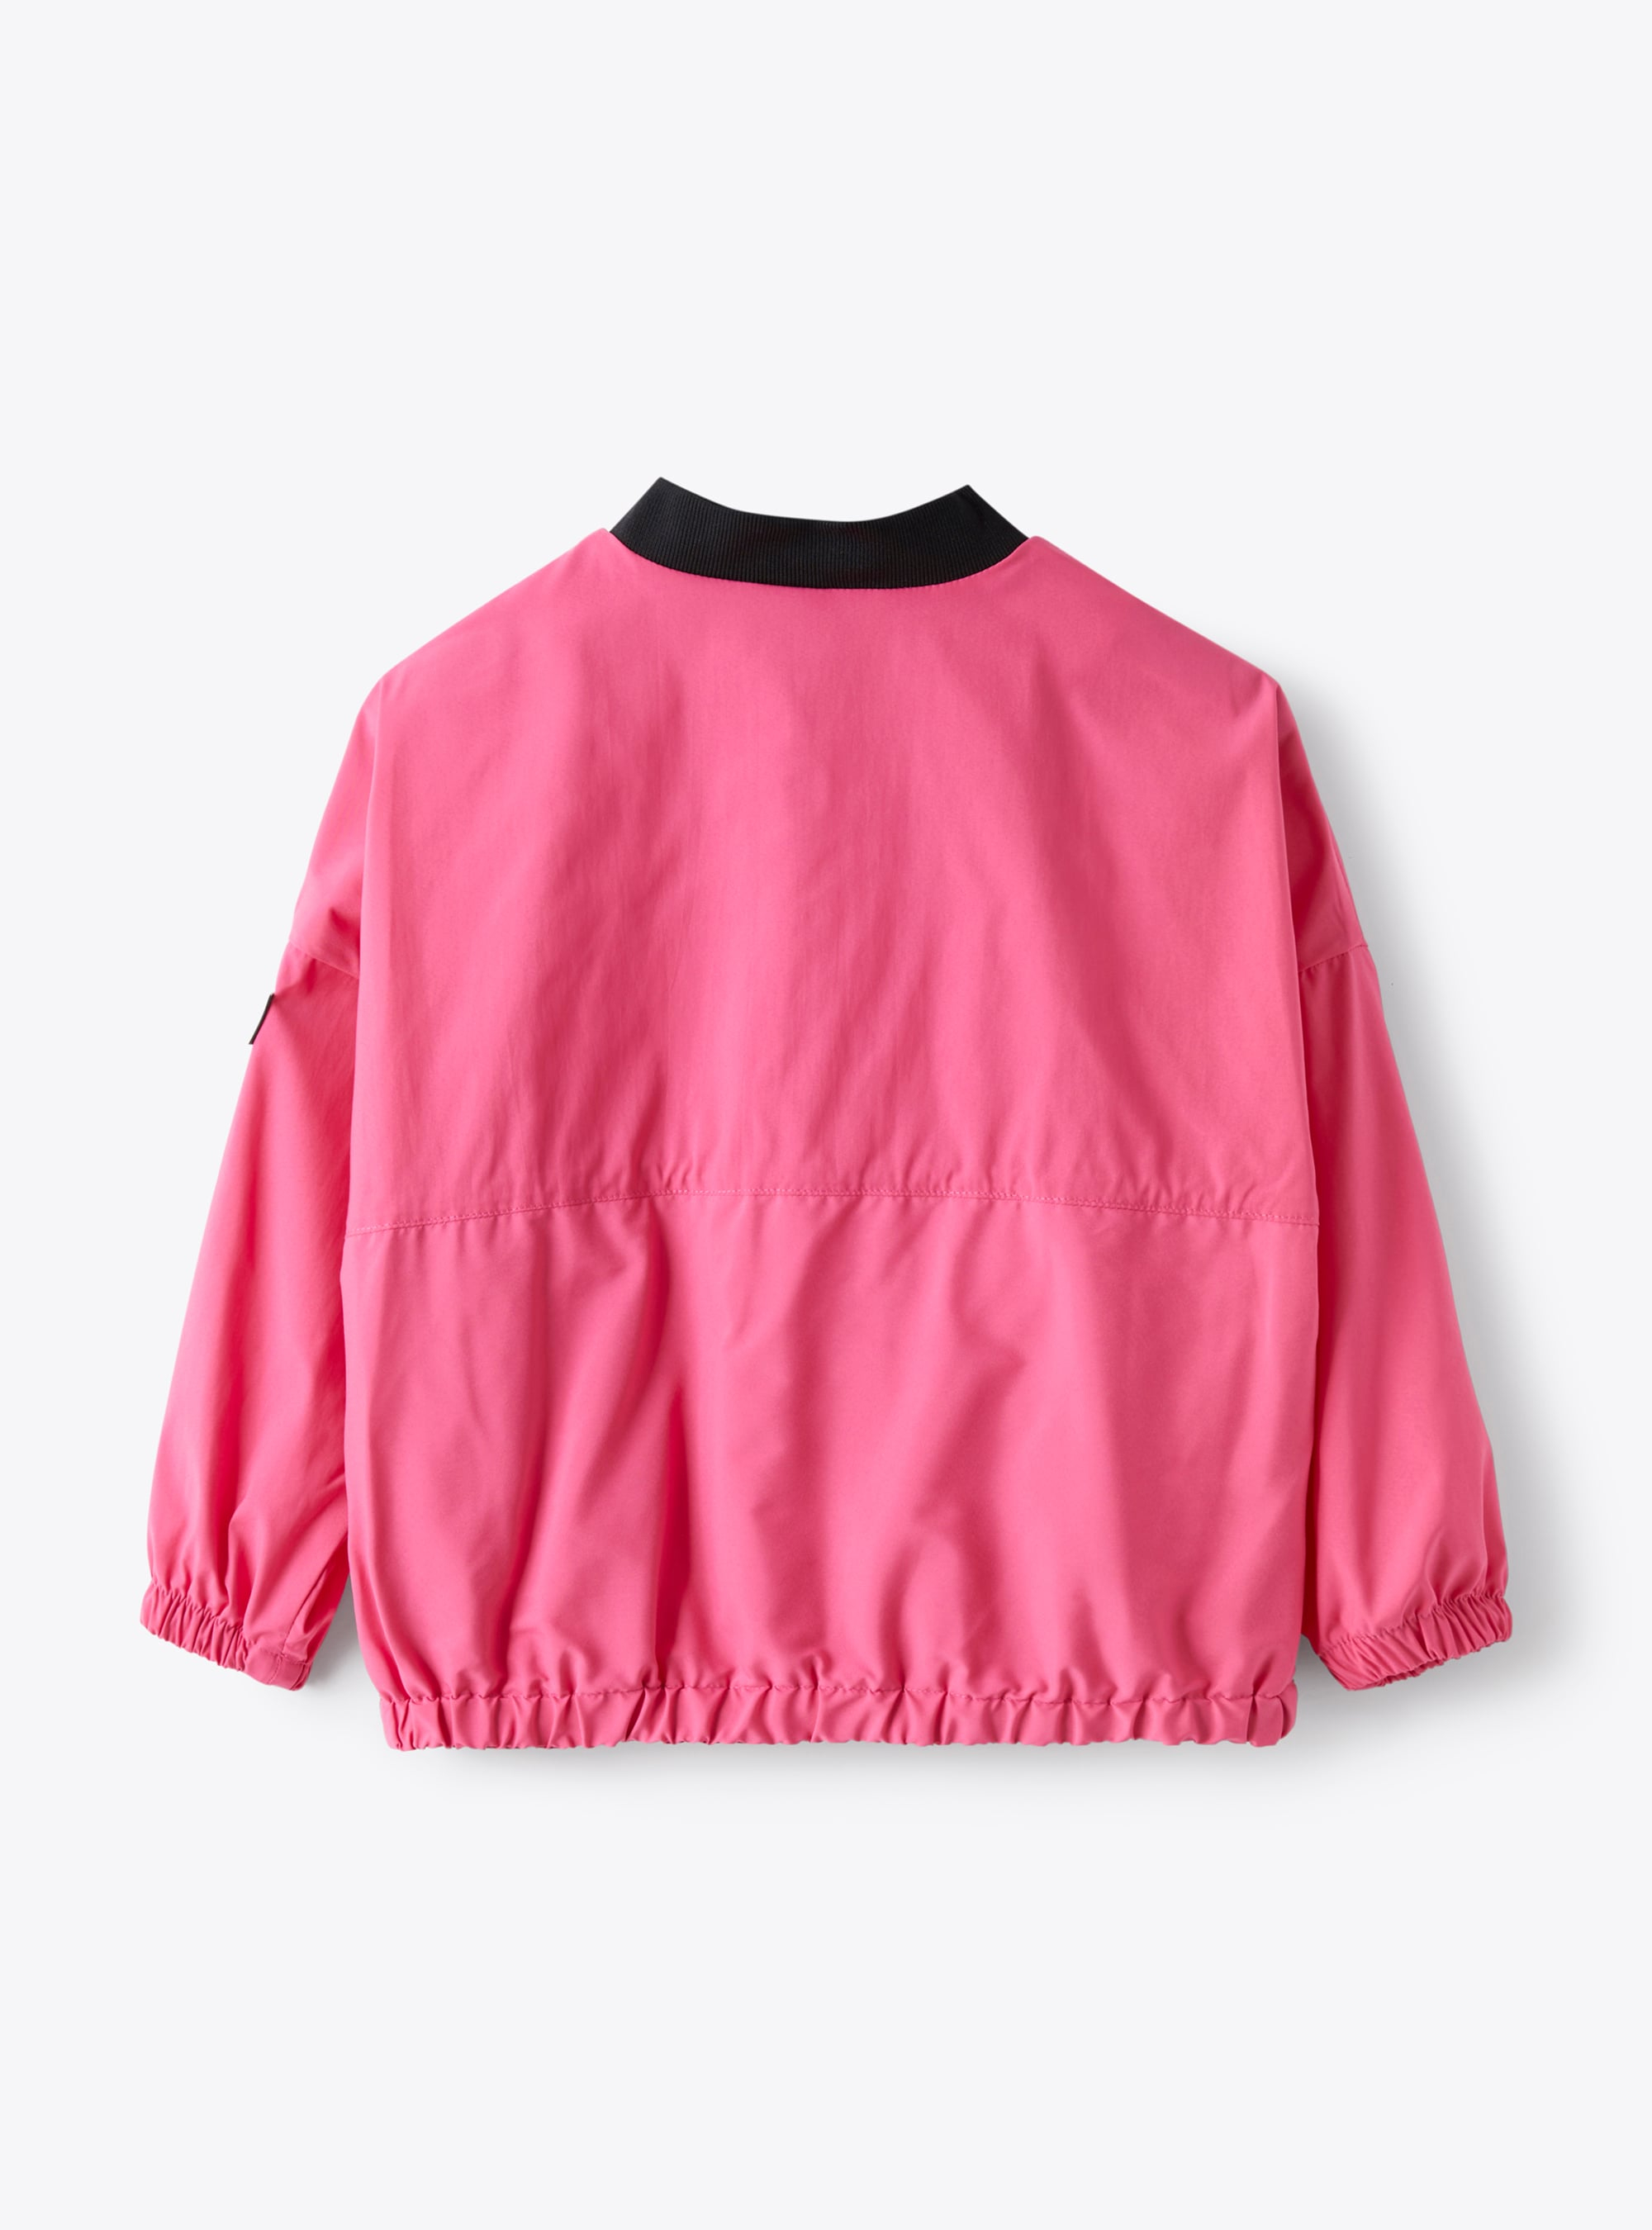 Jacket in fuchsia-pink hi-tech nylon - Fuchsia | Il Gufo